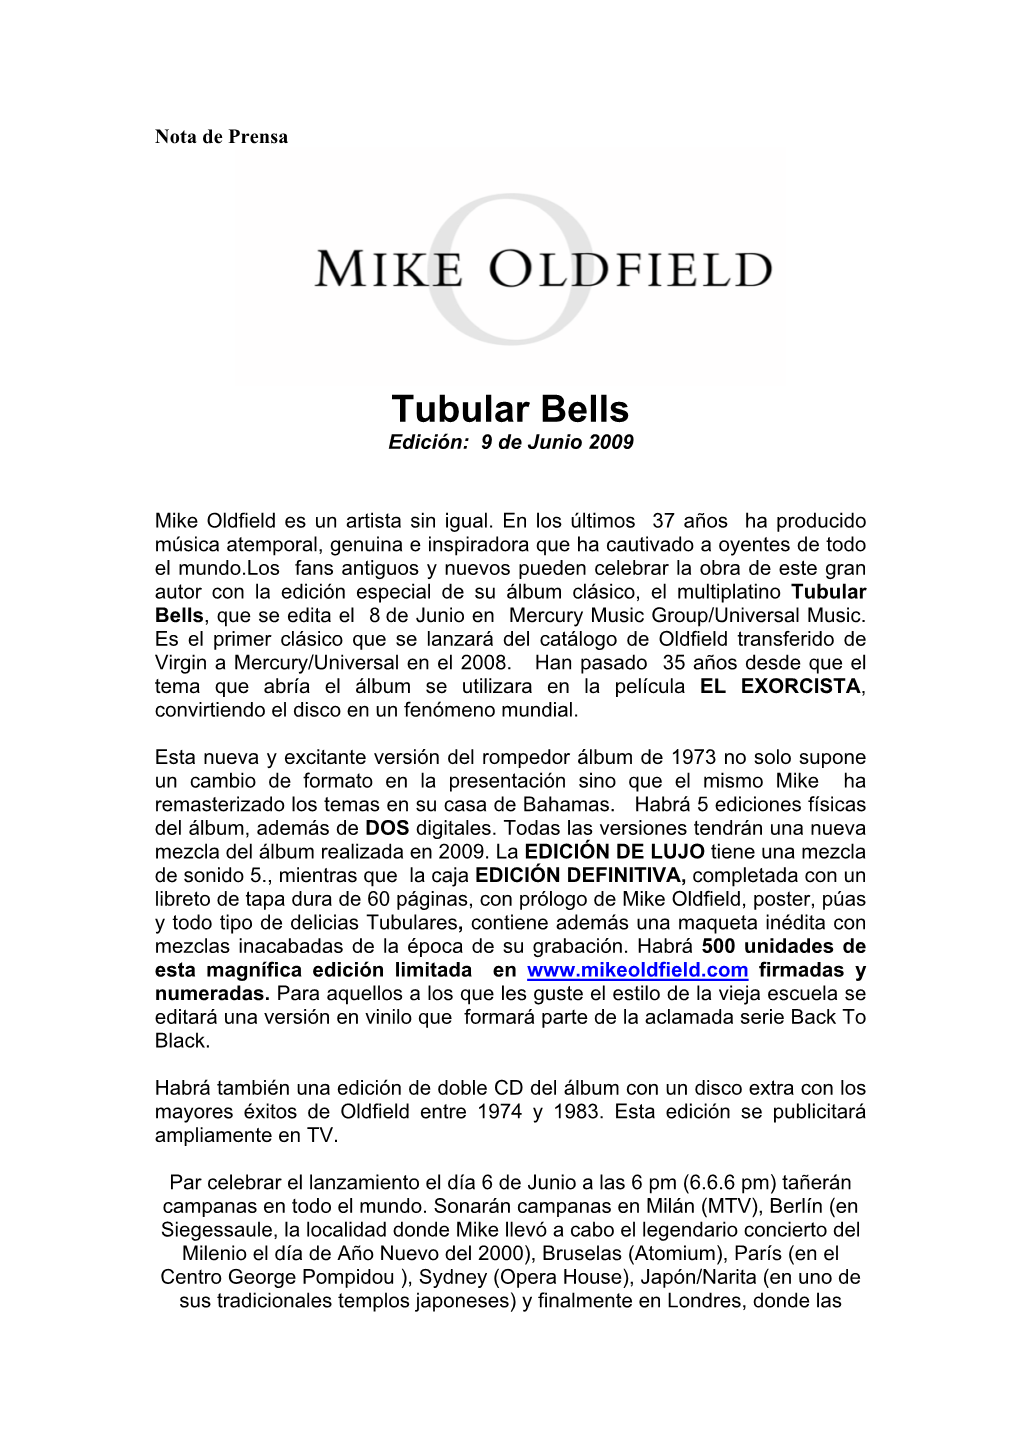 Mike Oldfield: Tubular Bells 2009